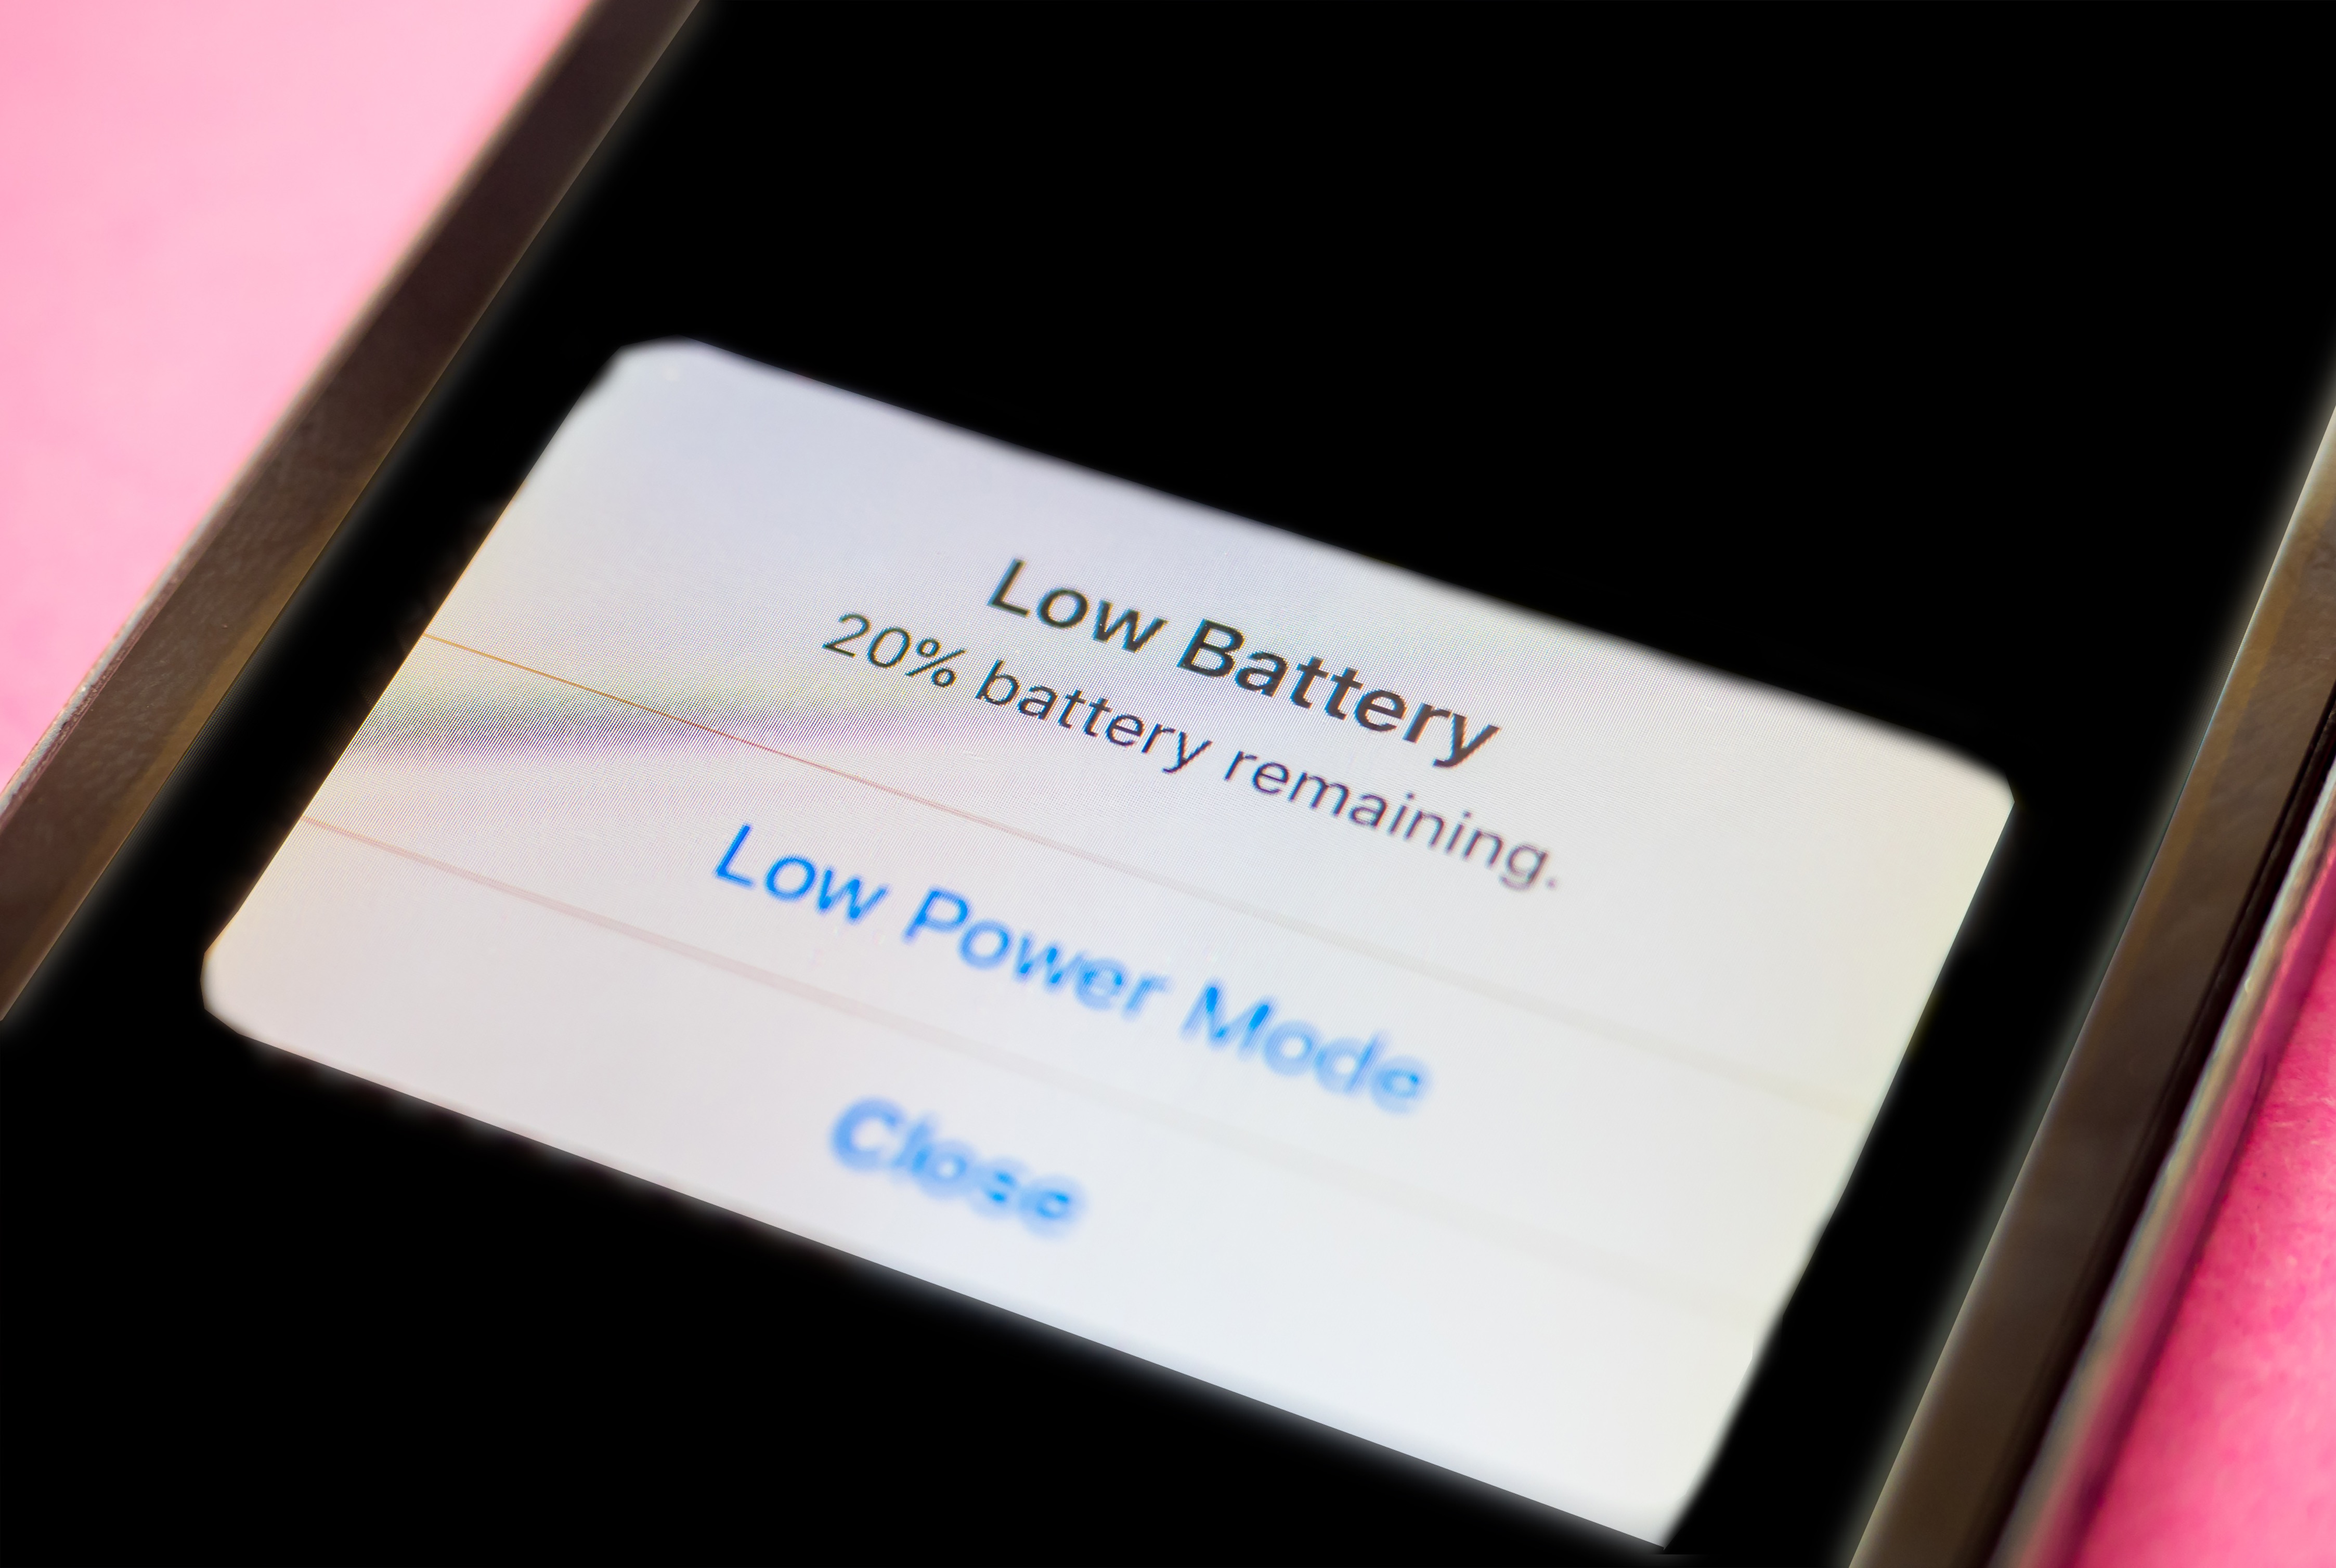 Low battery apple. Apple Low Battery. International Version айфон. 1% Зарядки iphone экран. Low Battery телефон.